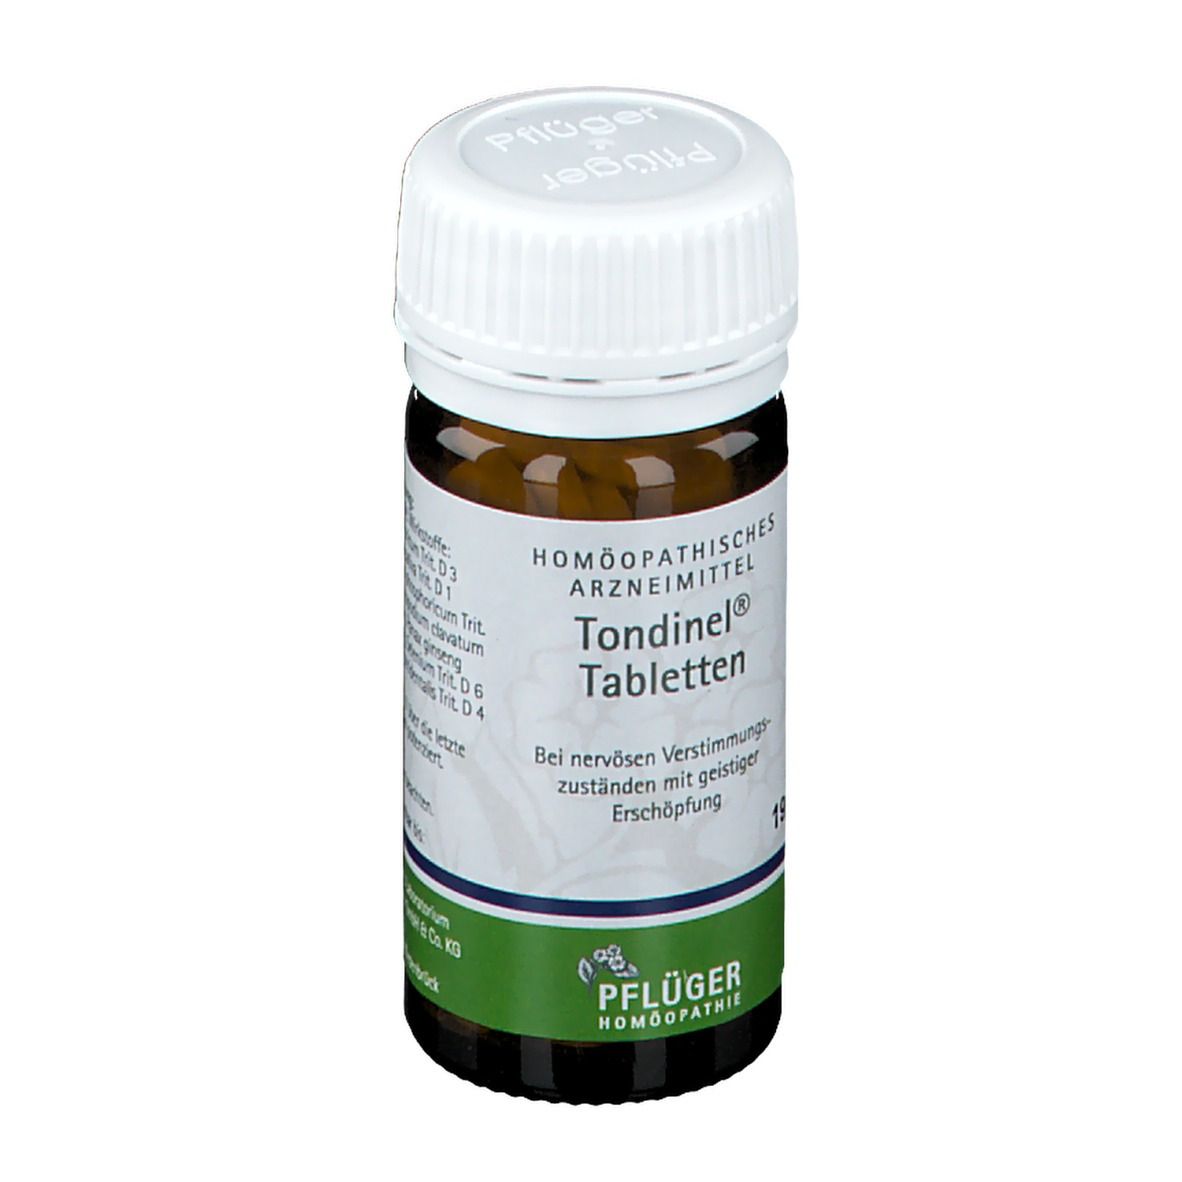 Tondinel® Tabletten